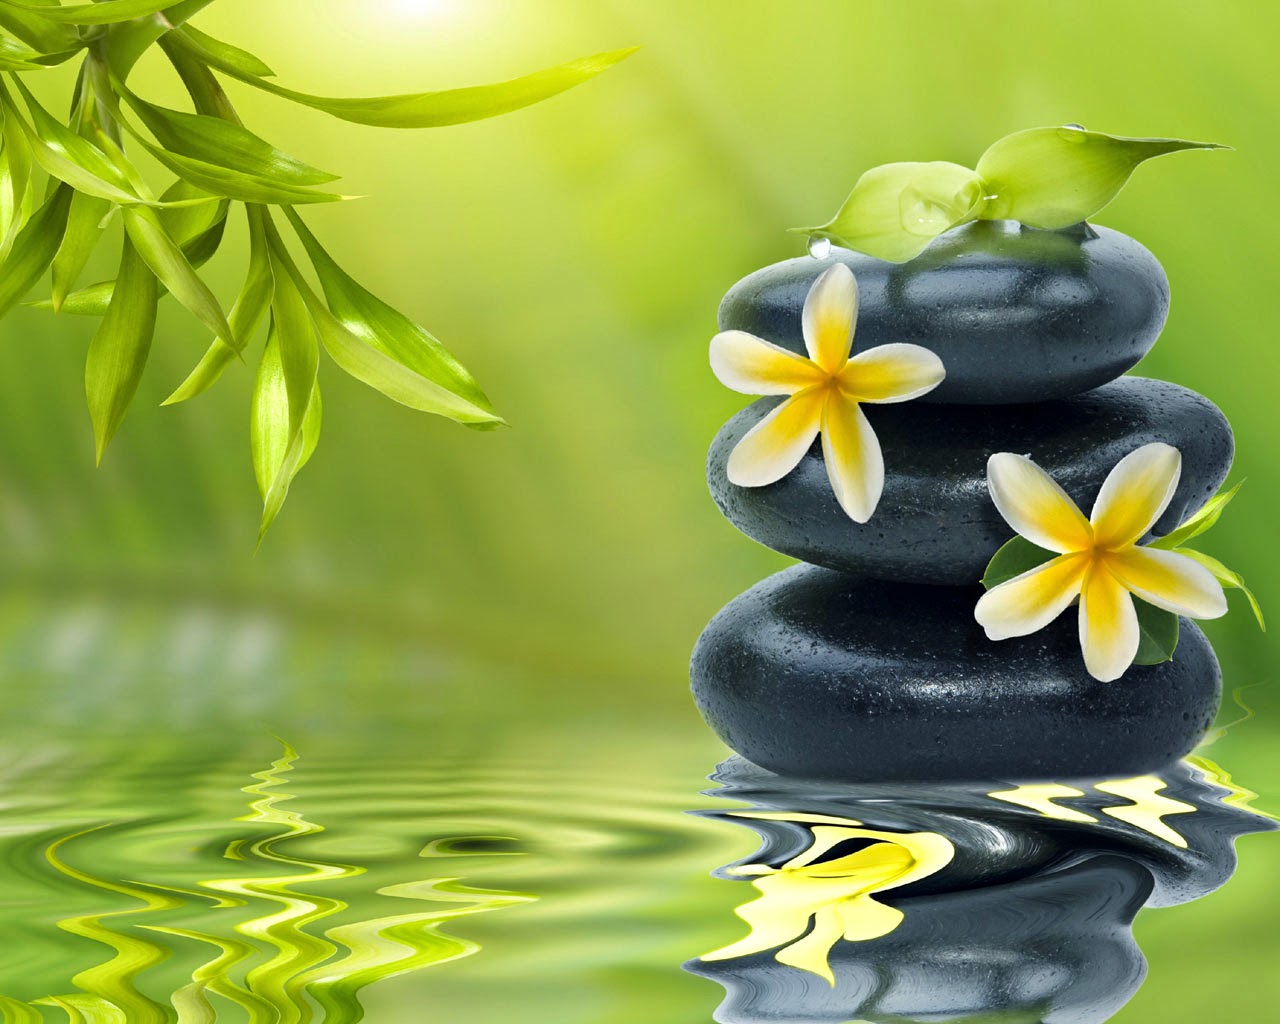 Zen Relaxation Backgrounds: Peaceful Zen